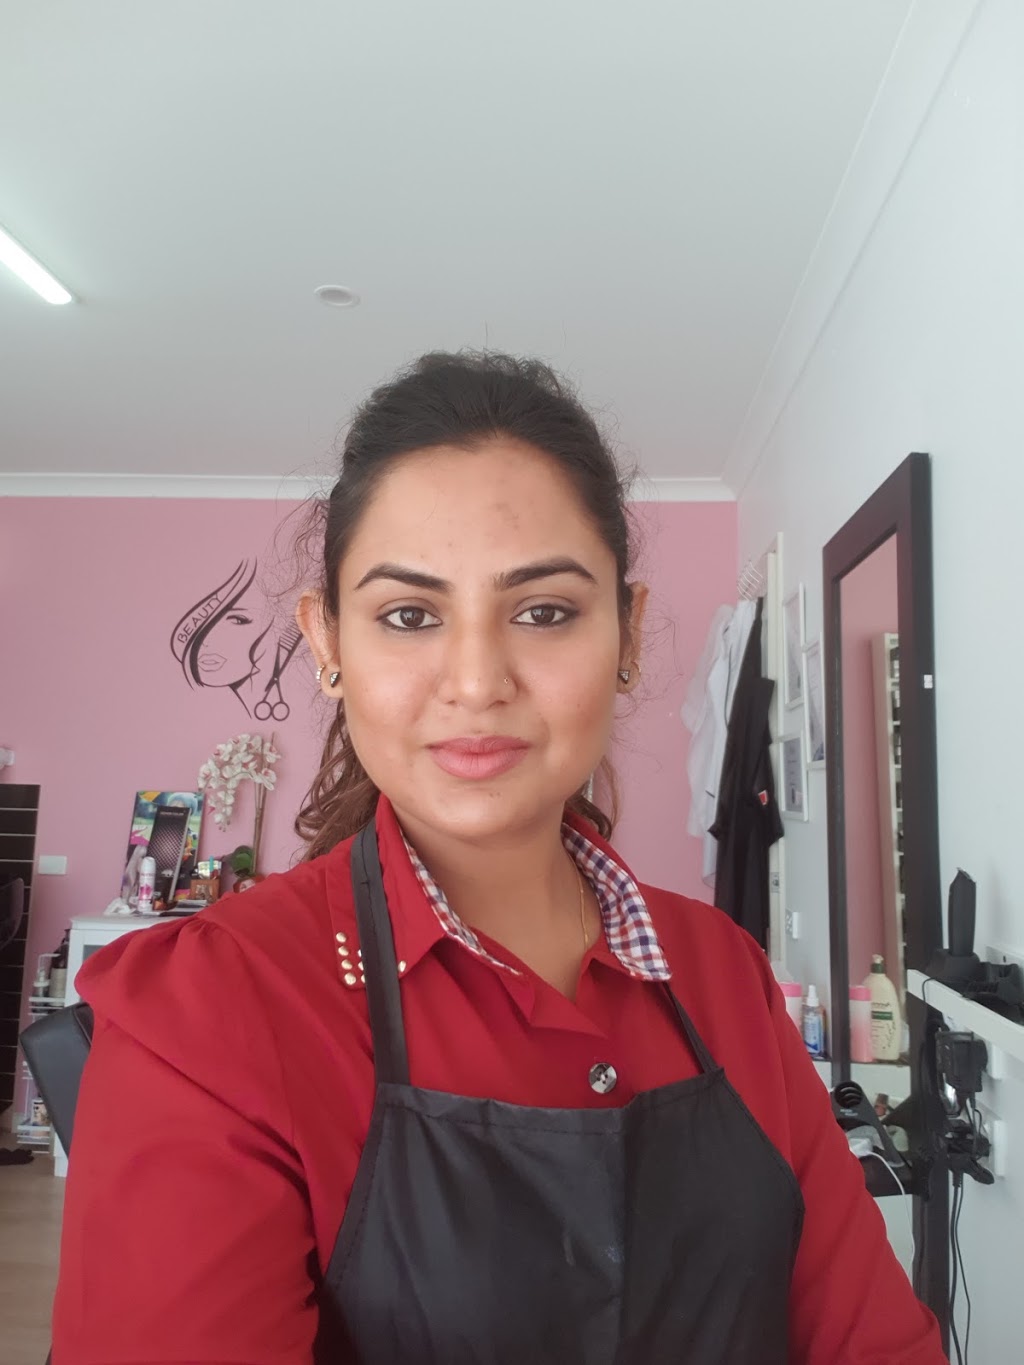 Enhance Hair & Beauty | hair care | 28 Chatham Ave, Tarneit VIC 3029, Australia | 0405721438 OR +61 405 721 438